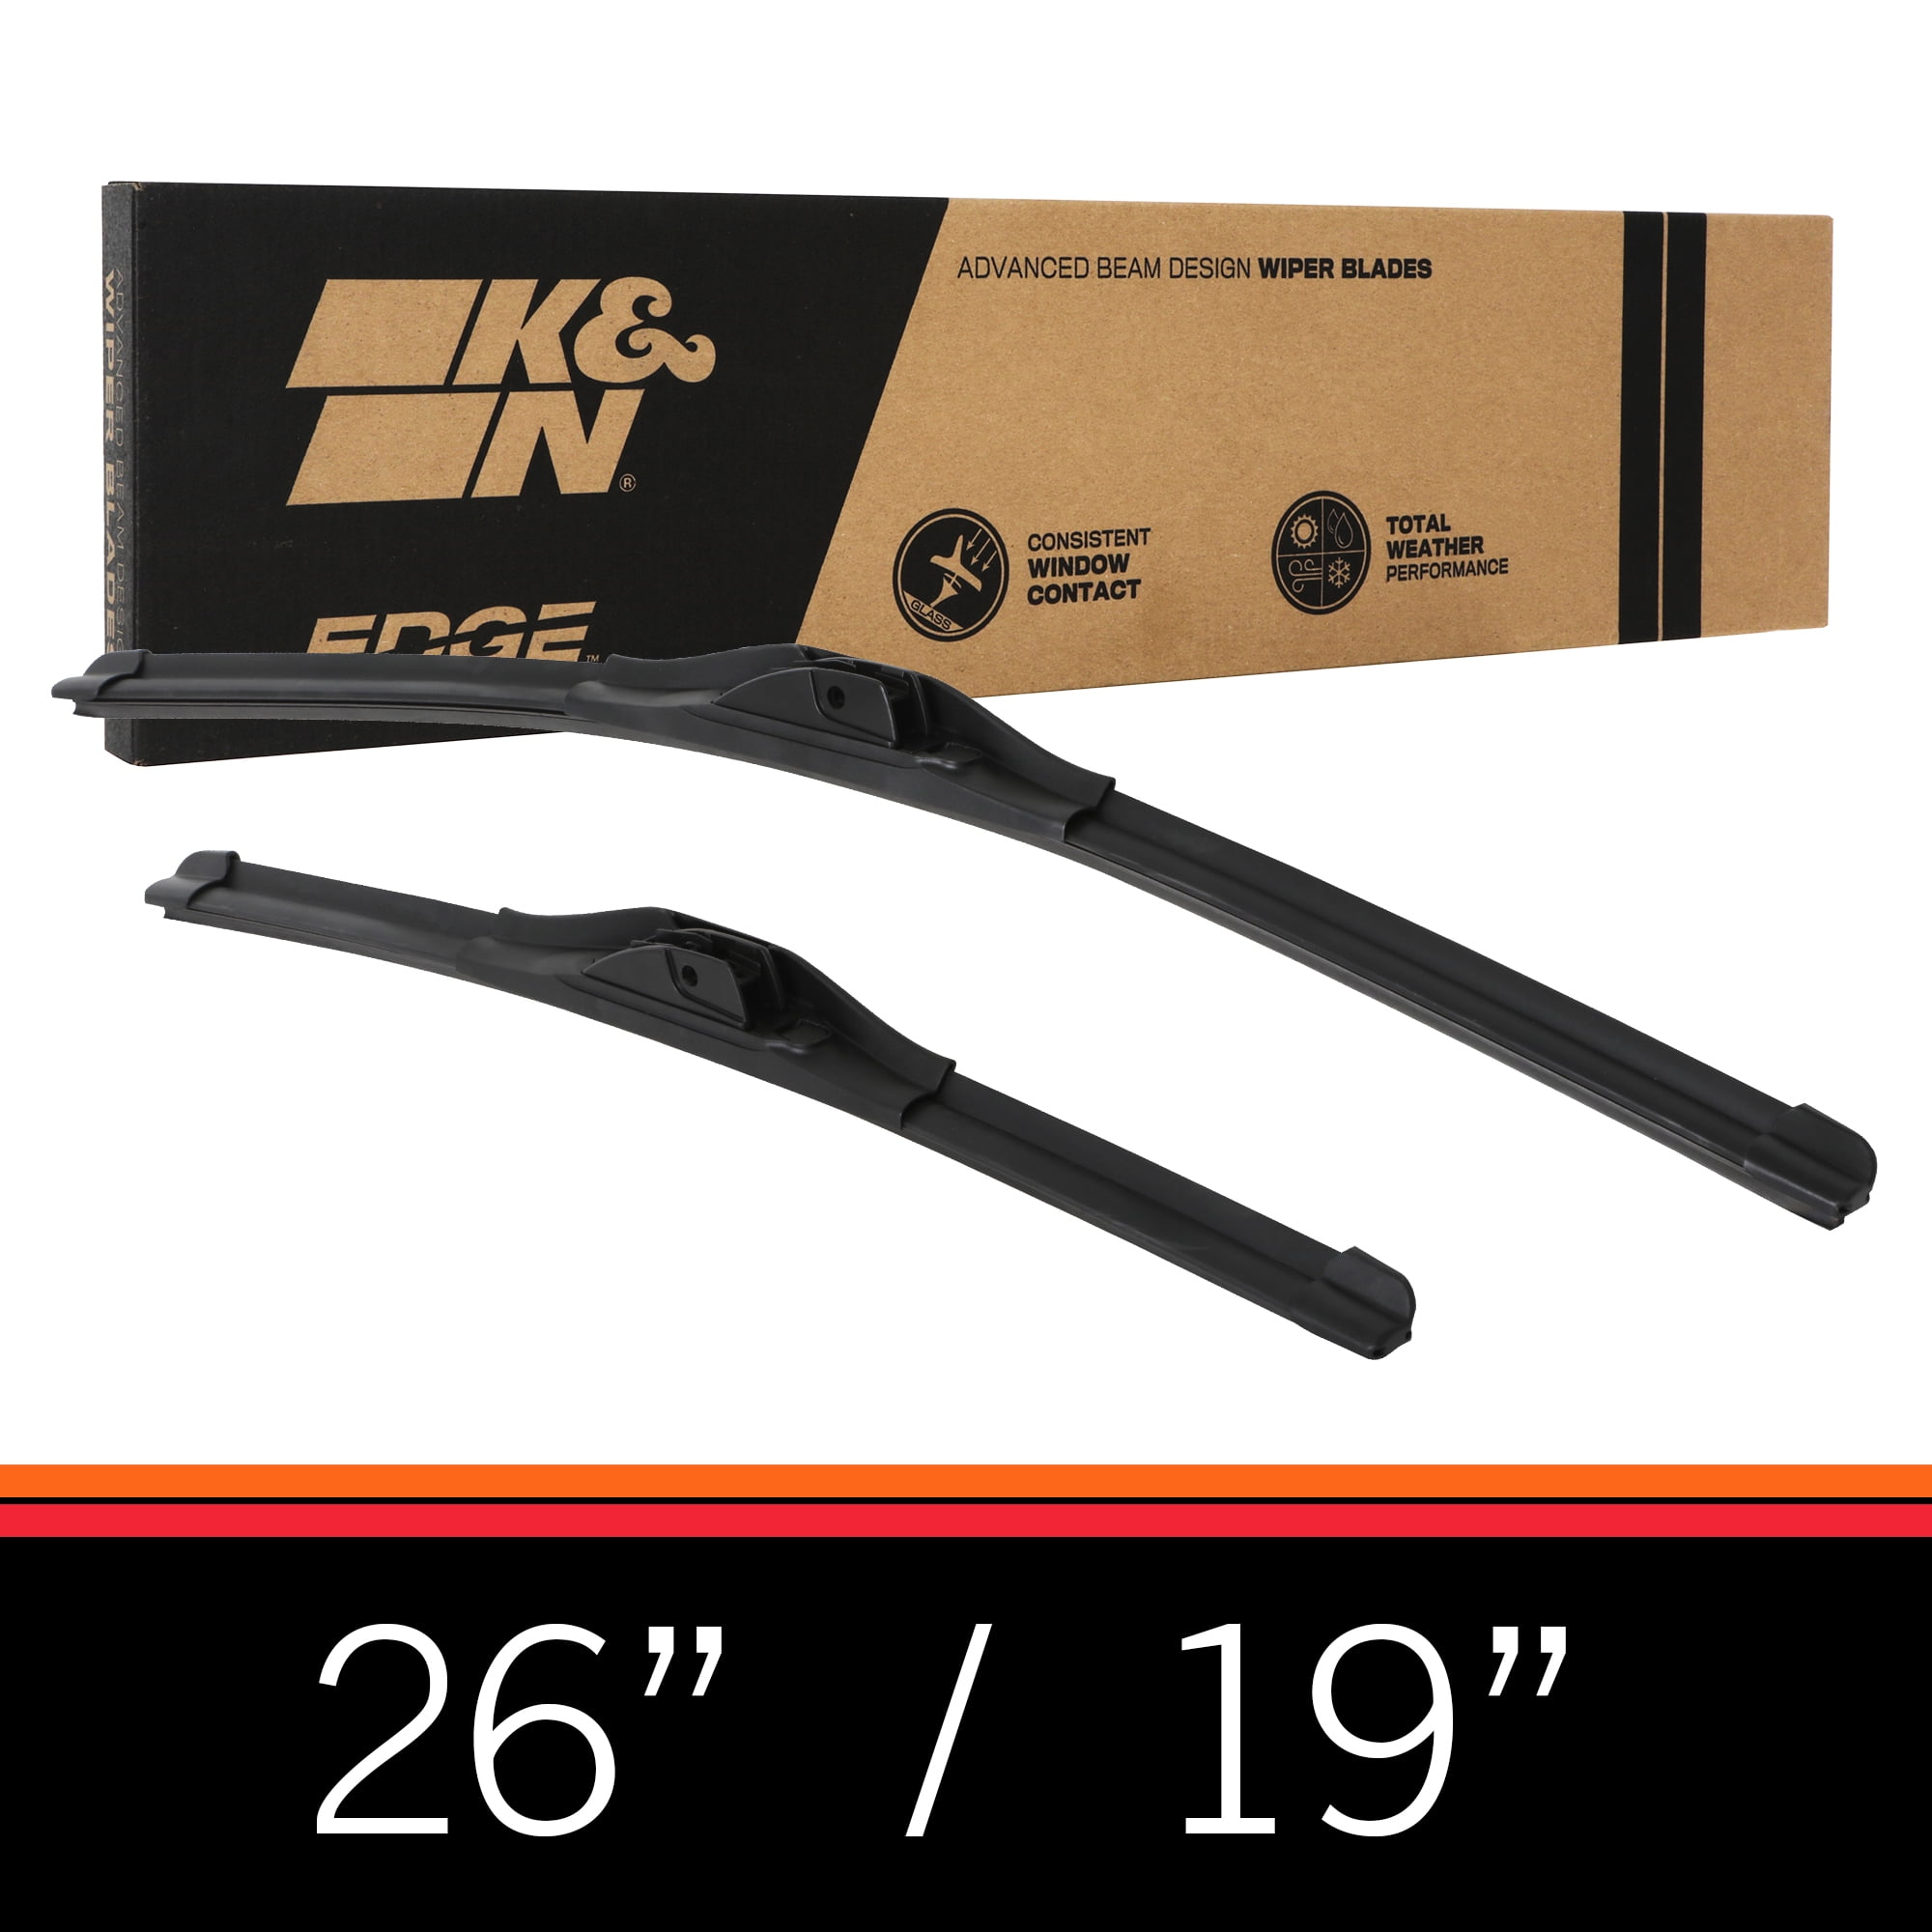 K&N EDGE All Weather Performance Wiper Blade 26"/19" (Pack of 2)